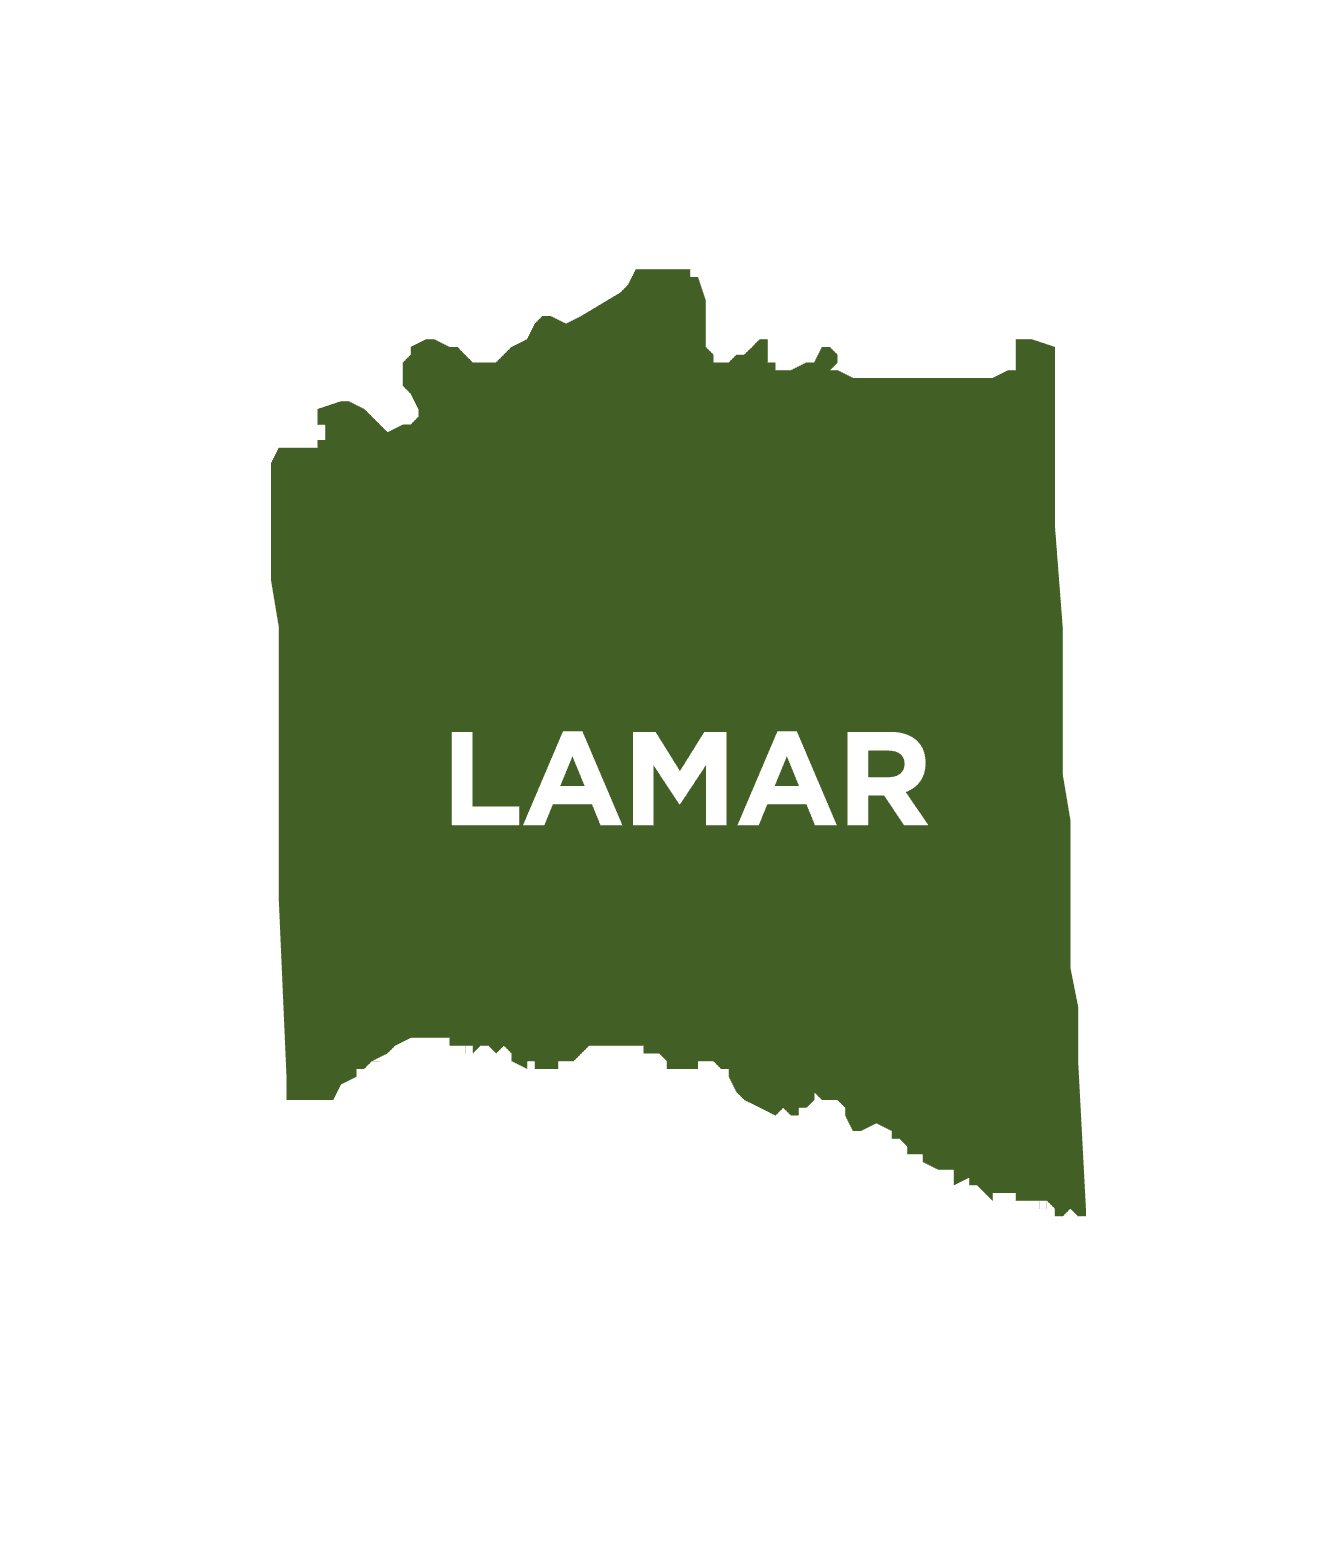 Lamar County